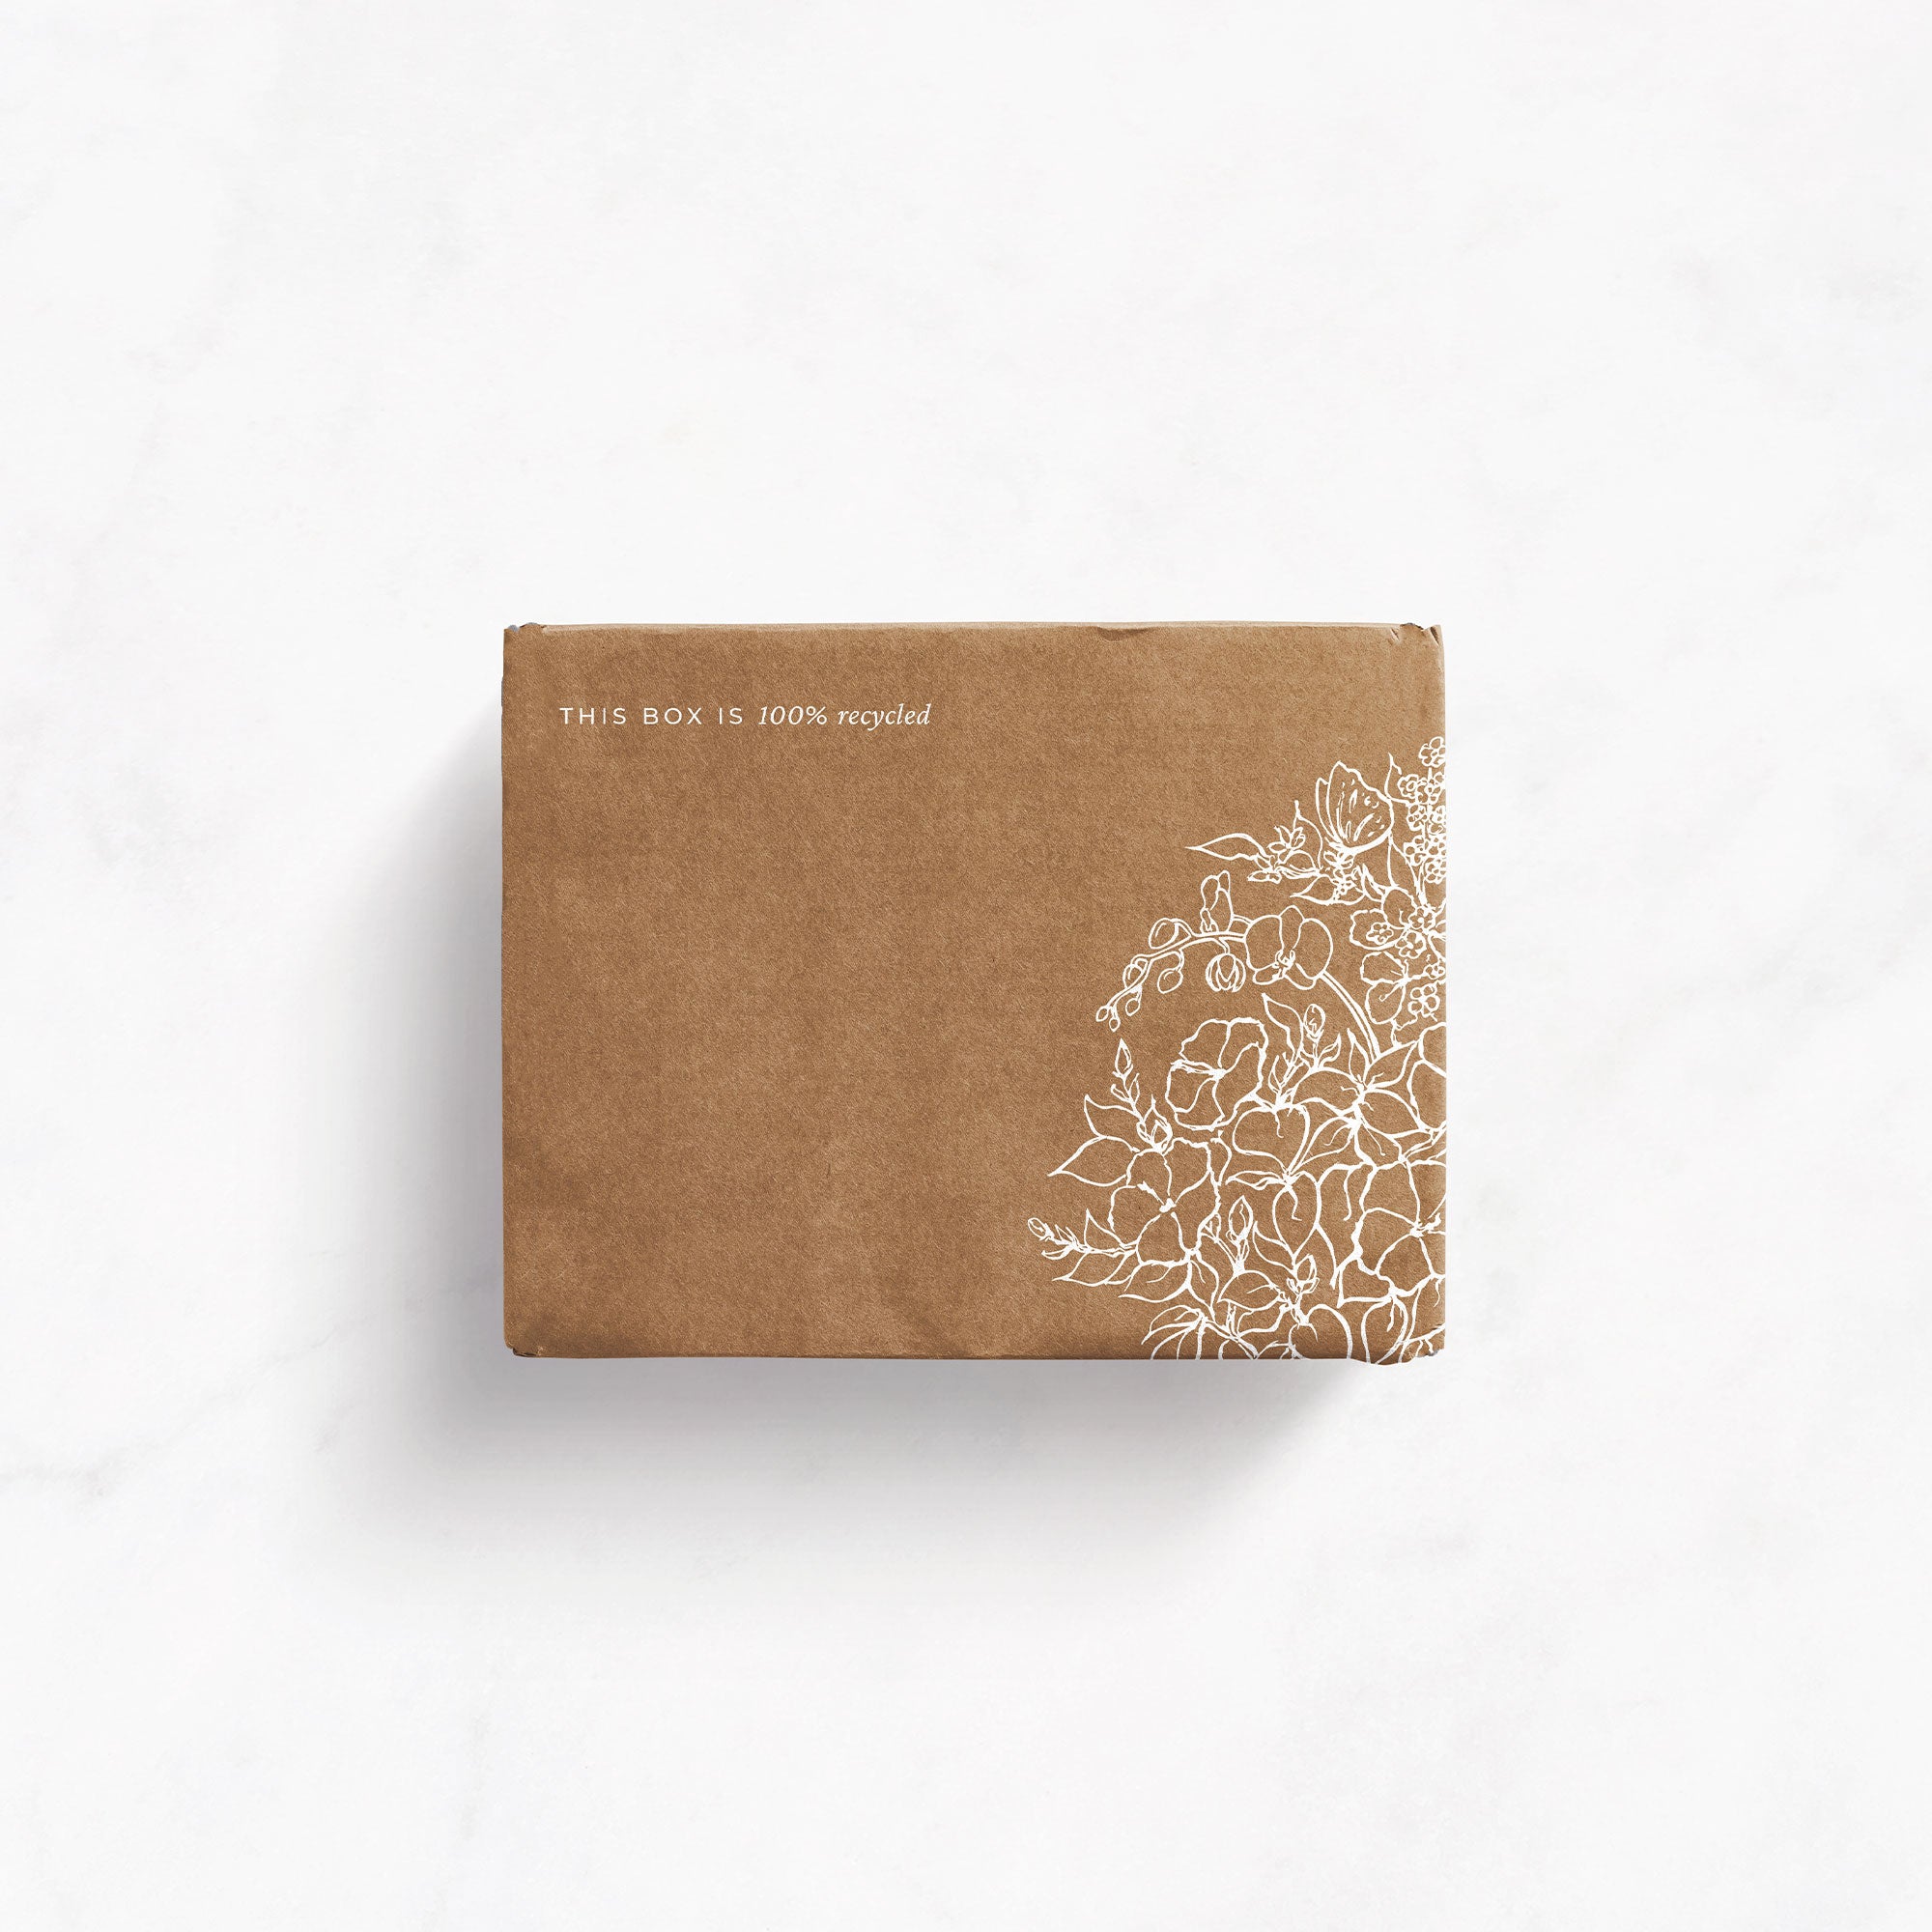 Karolina Król Studio elegant minimalist line illustrations for a shipping box packaging design